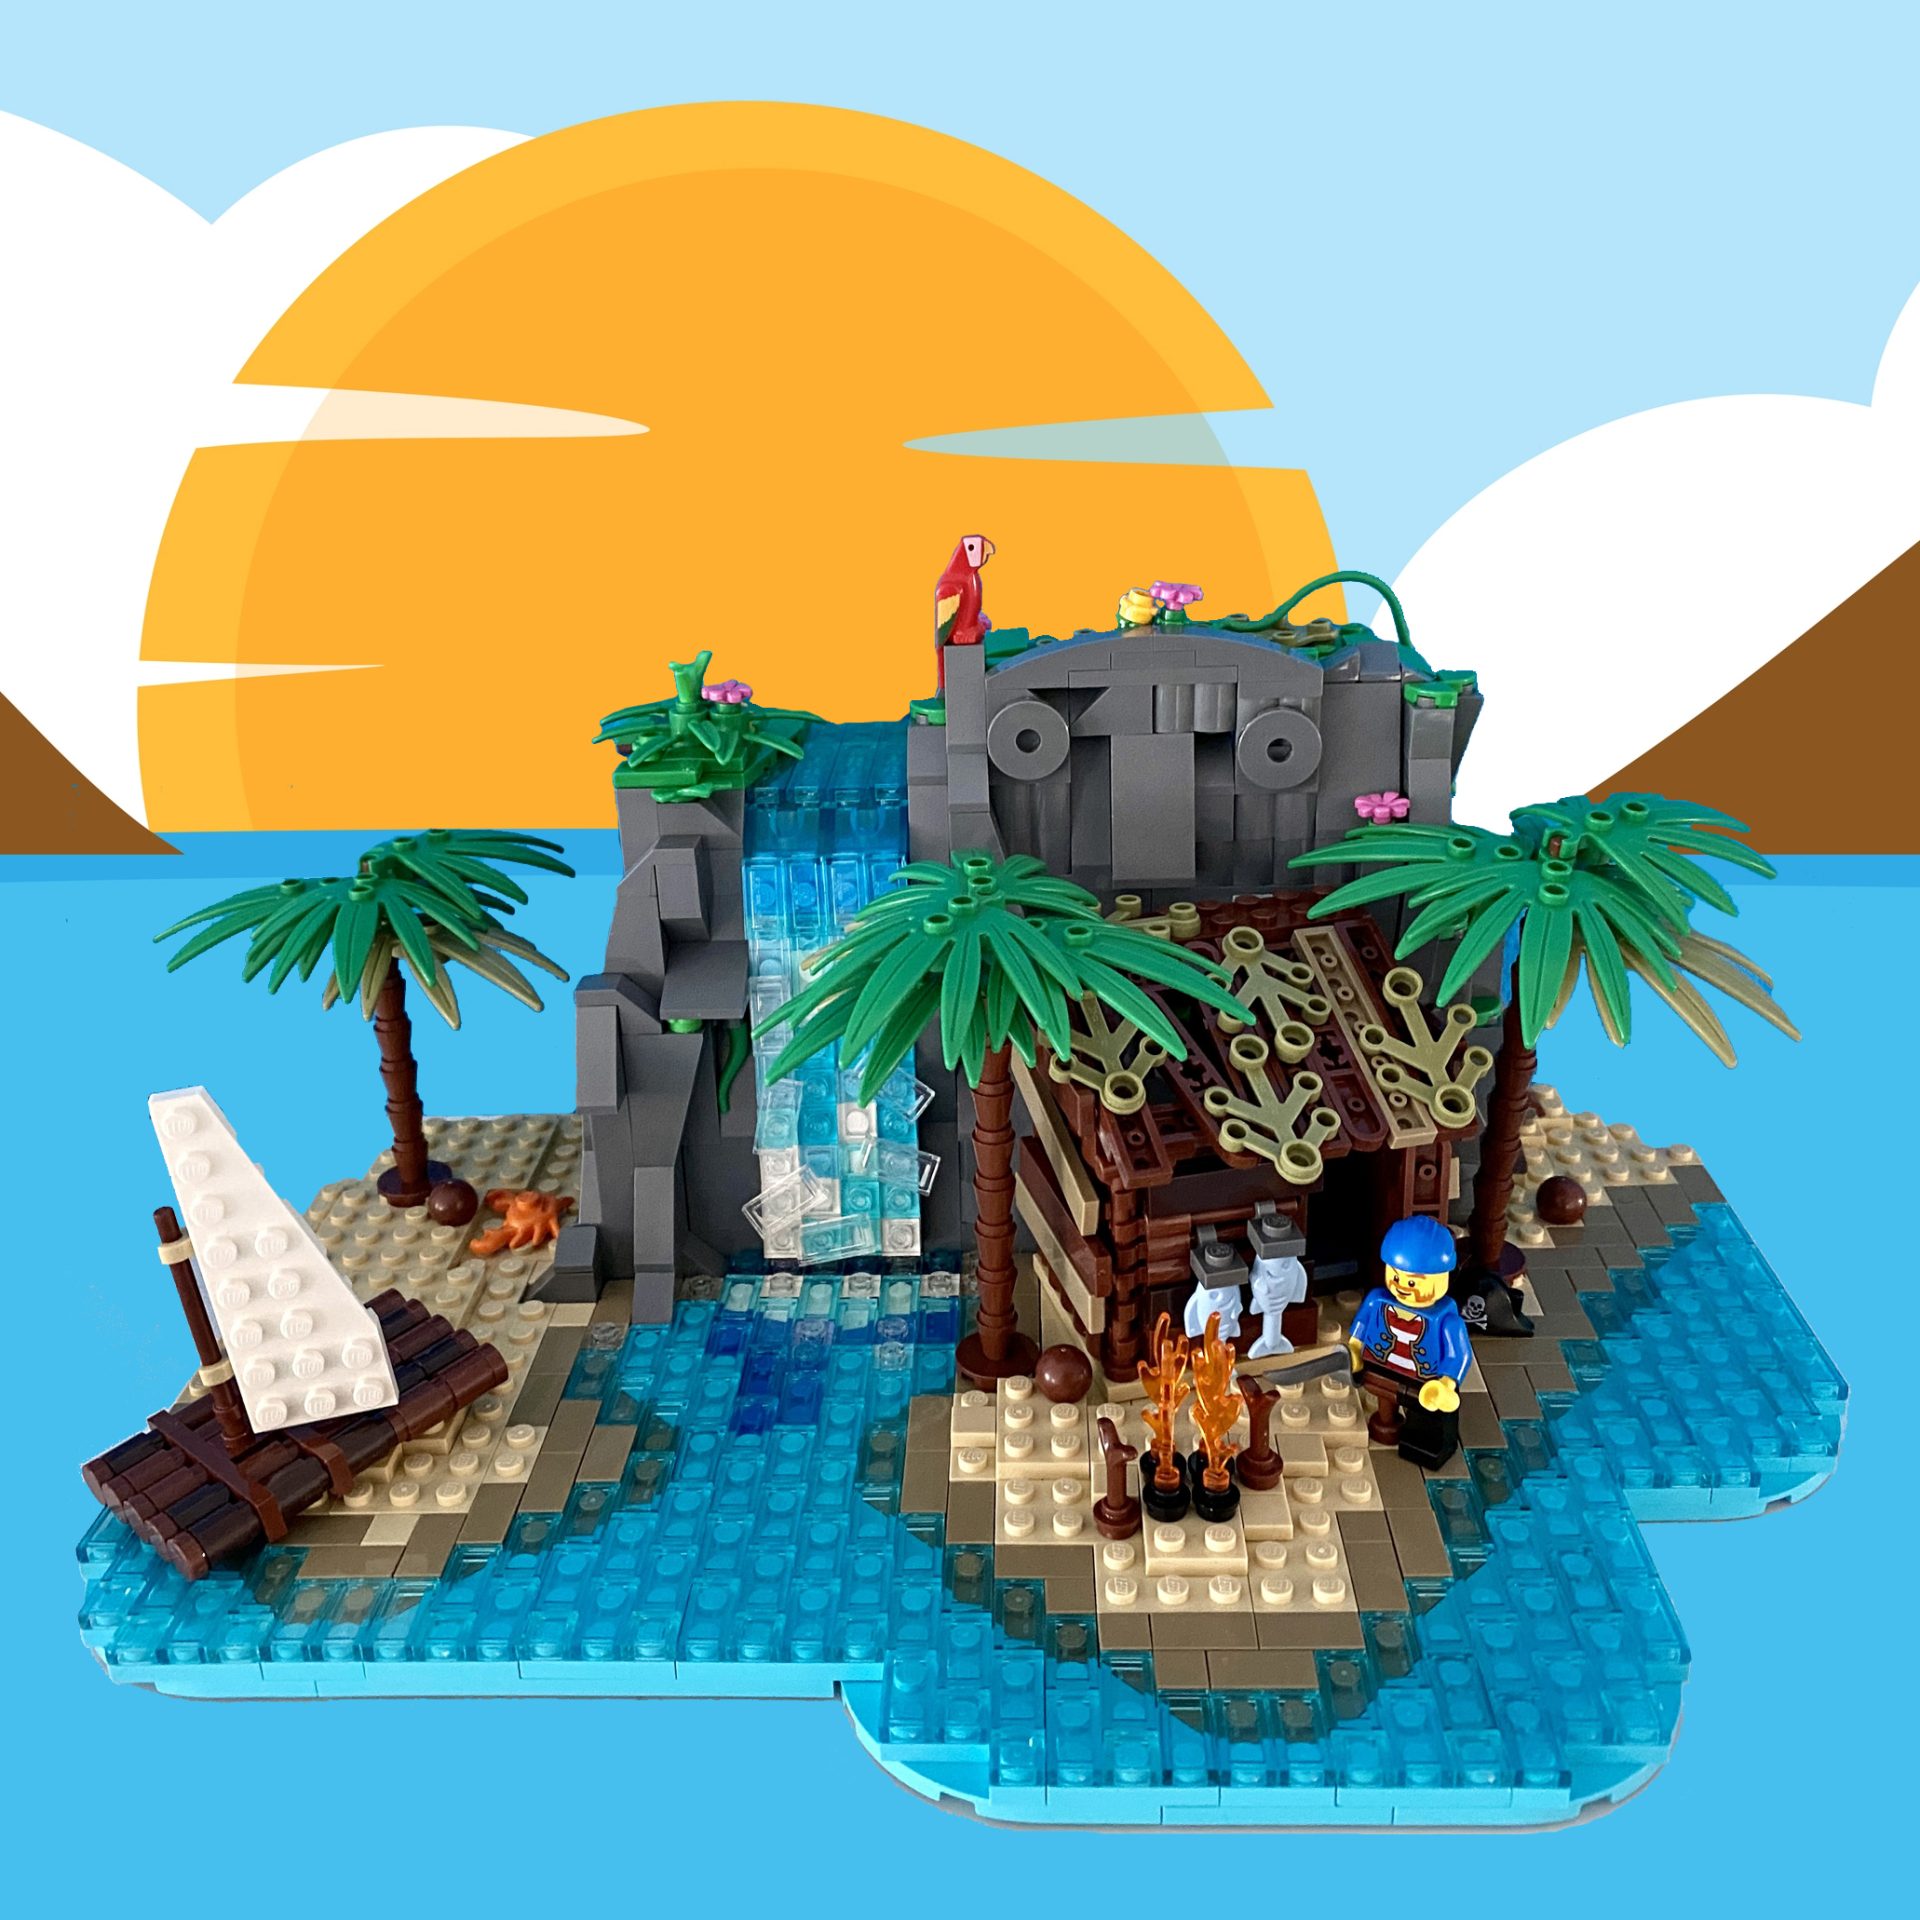 https://www.classic-pirates.com/wordpress/images/2022/08/lego-pirates-island-of-lost-cjtonic-1920x1920.jpg